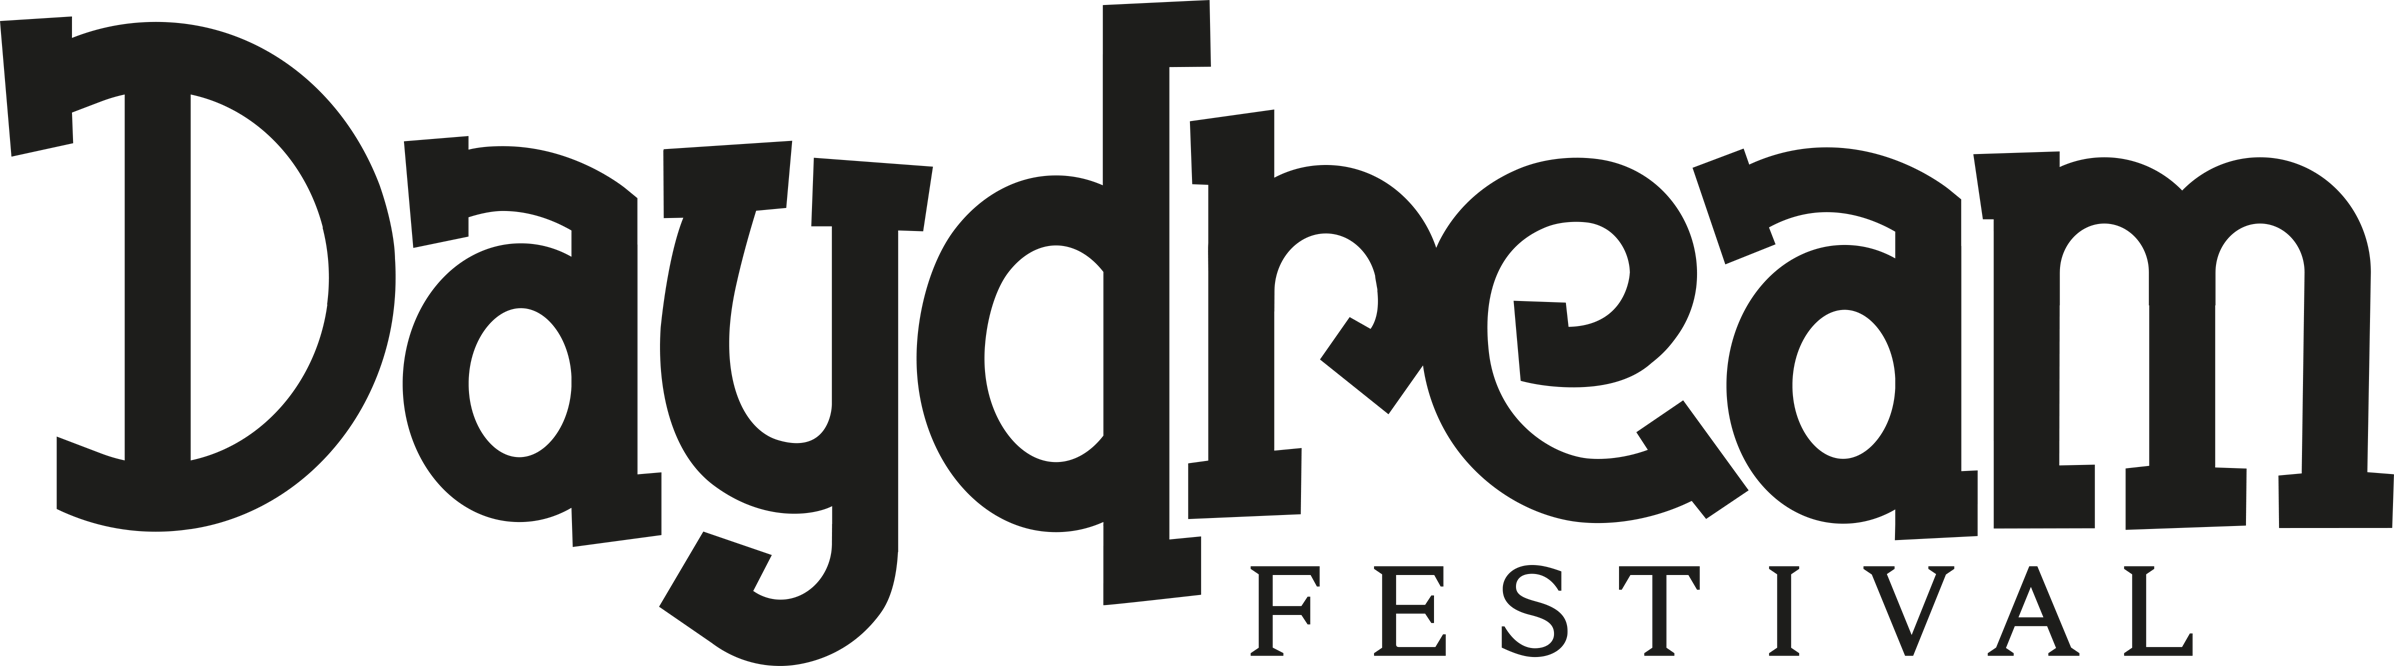 daydreamfestival logo